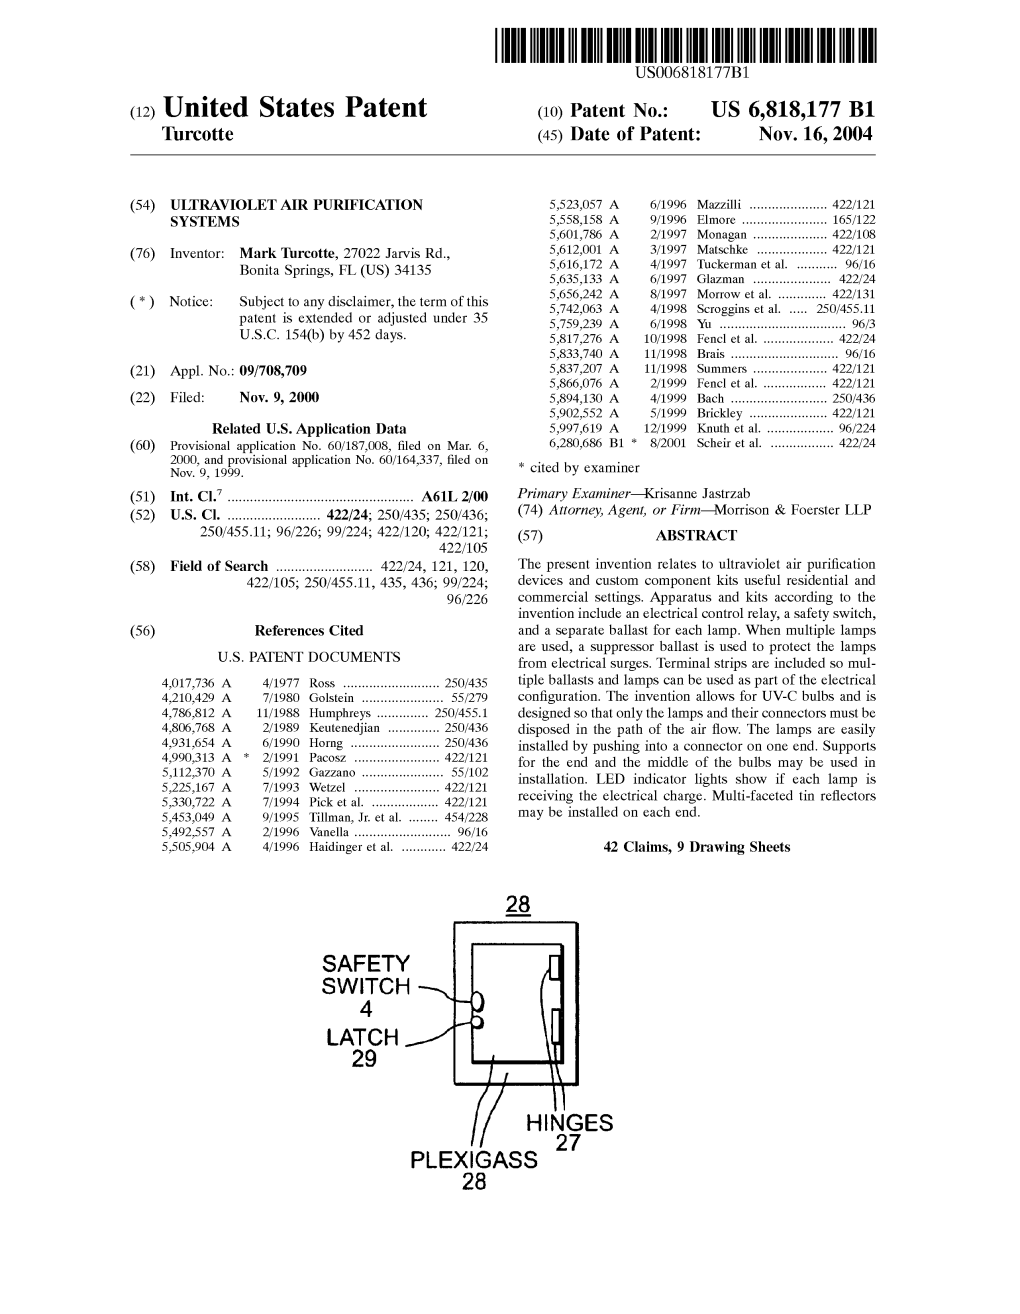 (10) Patent No.: US 6818177 B1